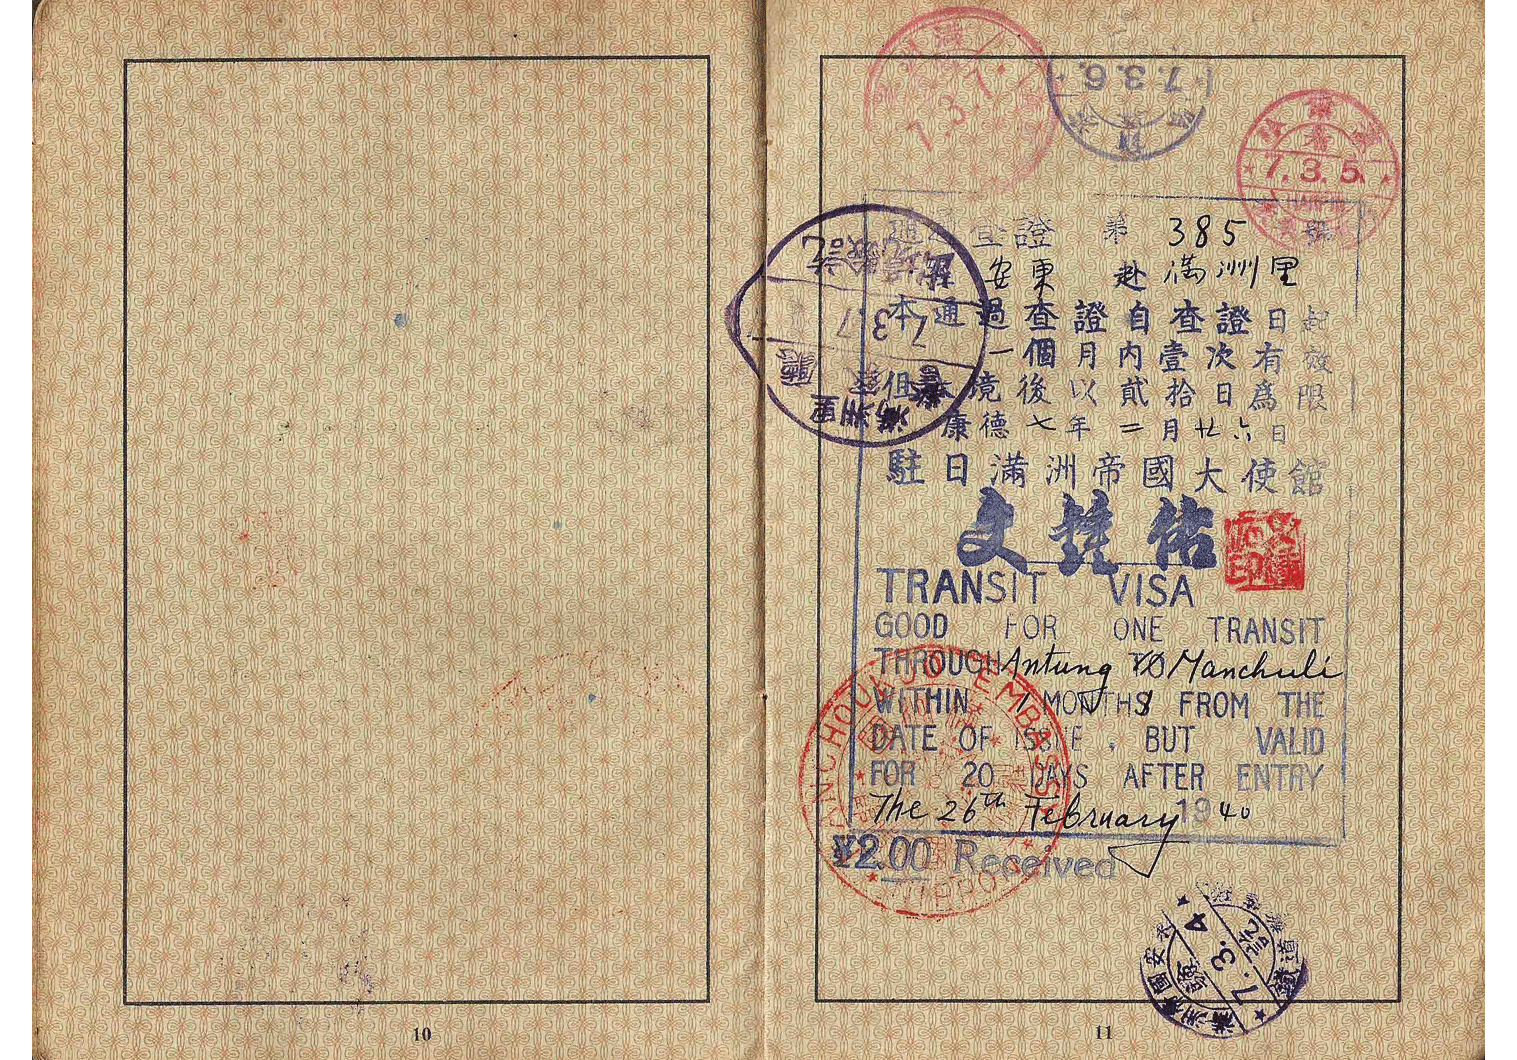 Manchurian visa WW2